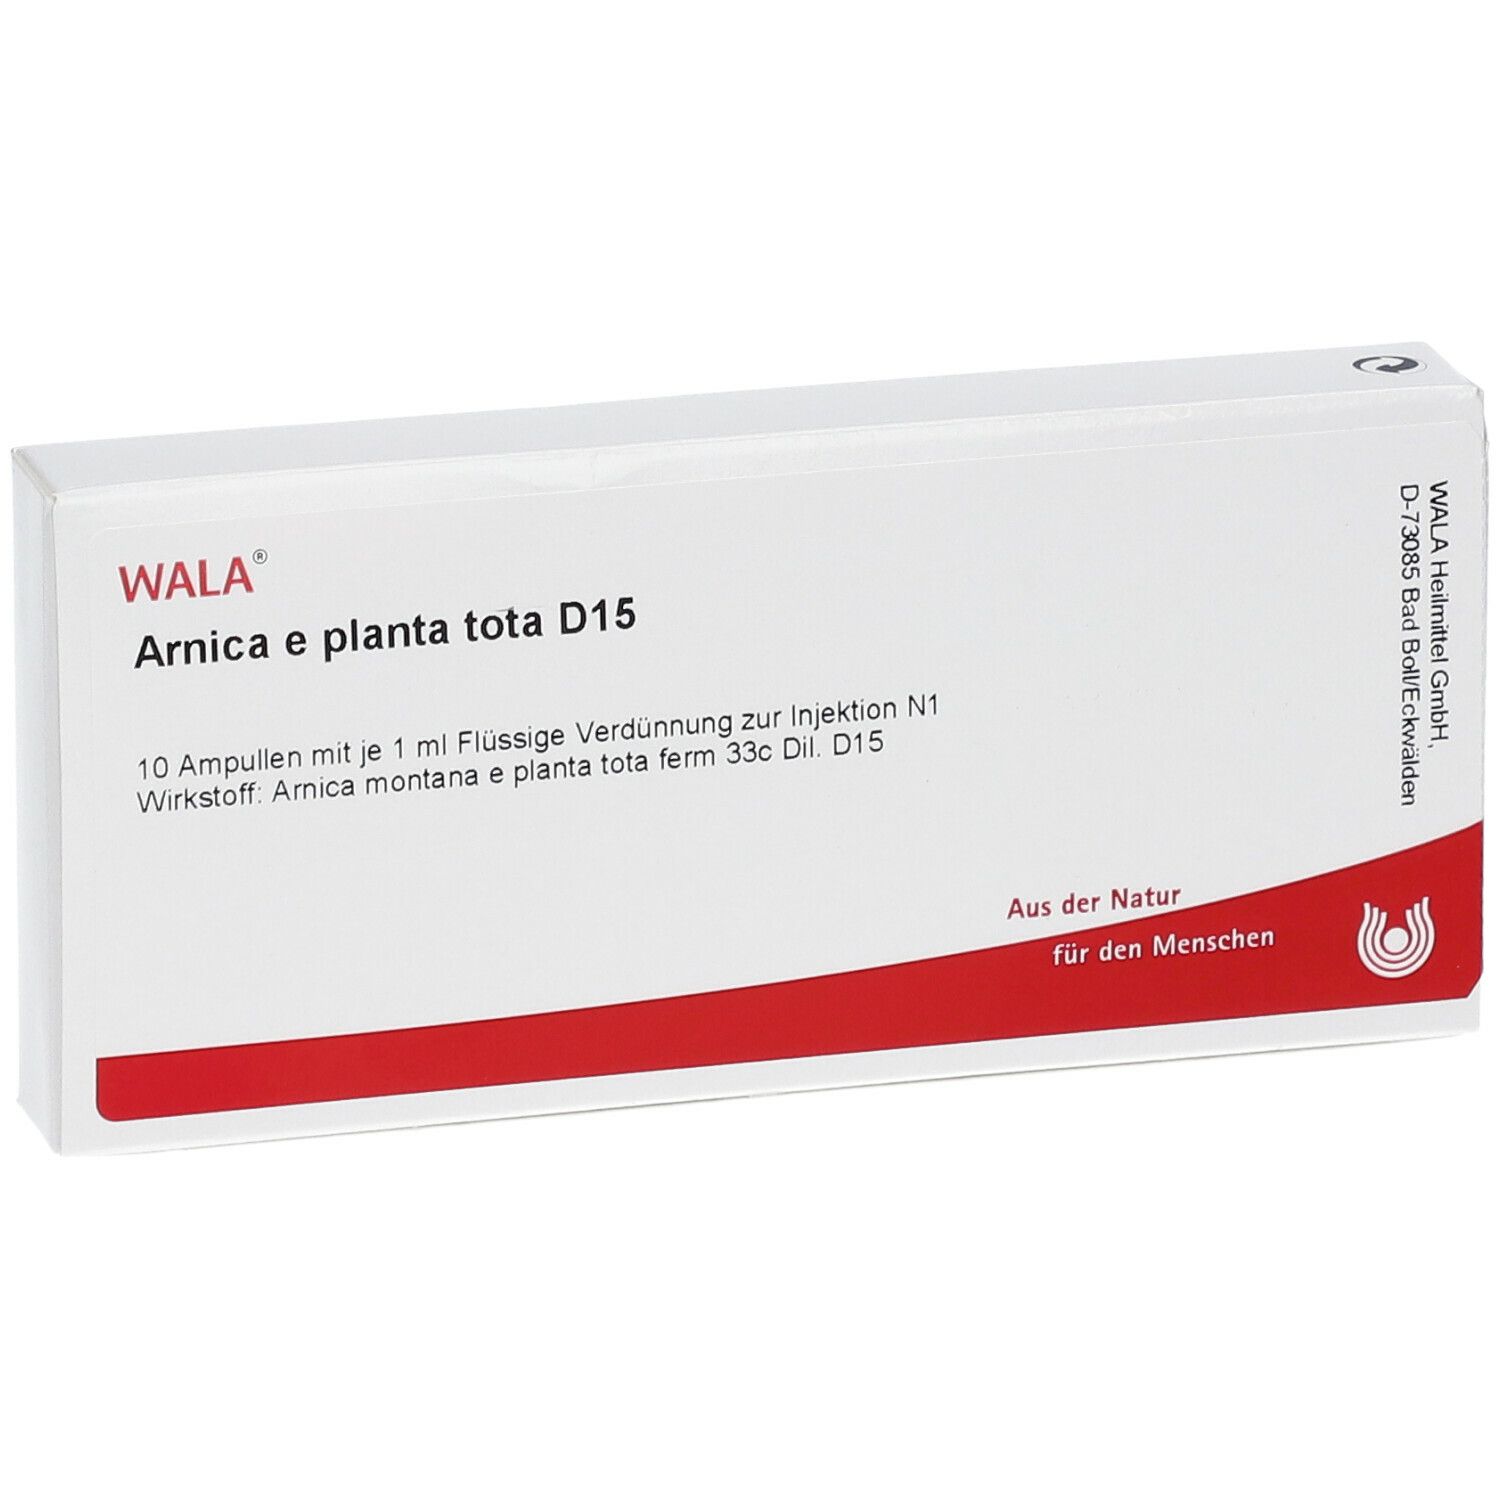 WALA® Arnica E Planta tota D 15 Amp.